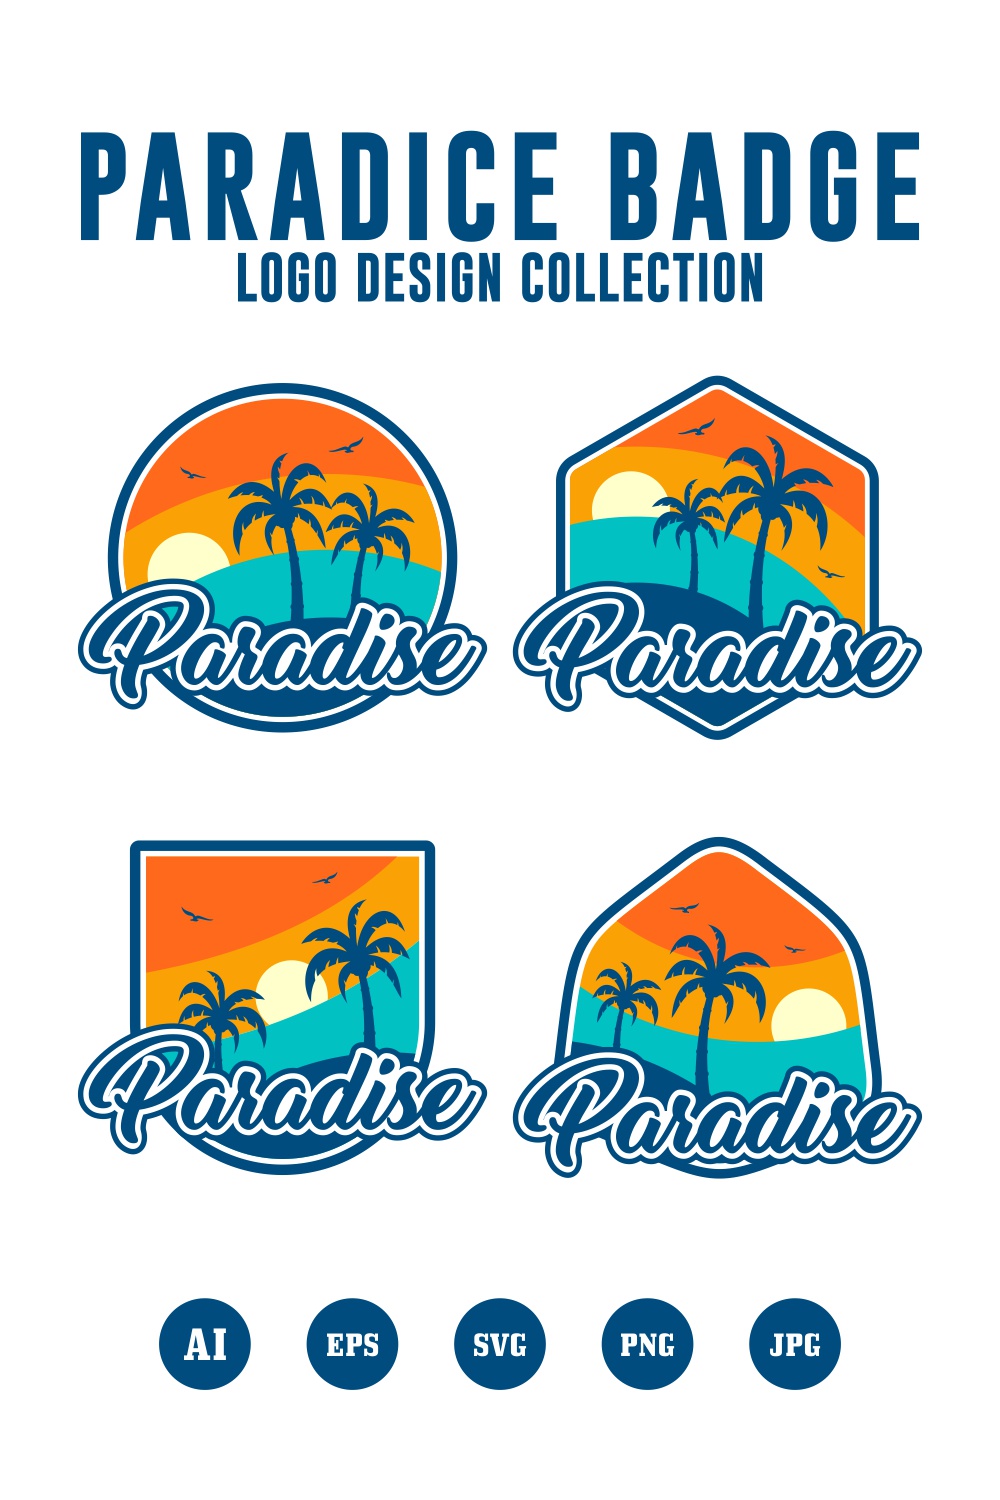 Set Paradise badge logo design collection - $4 pinterest preview image.